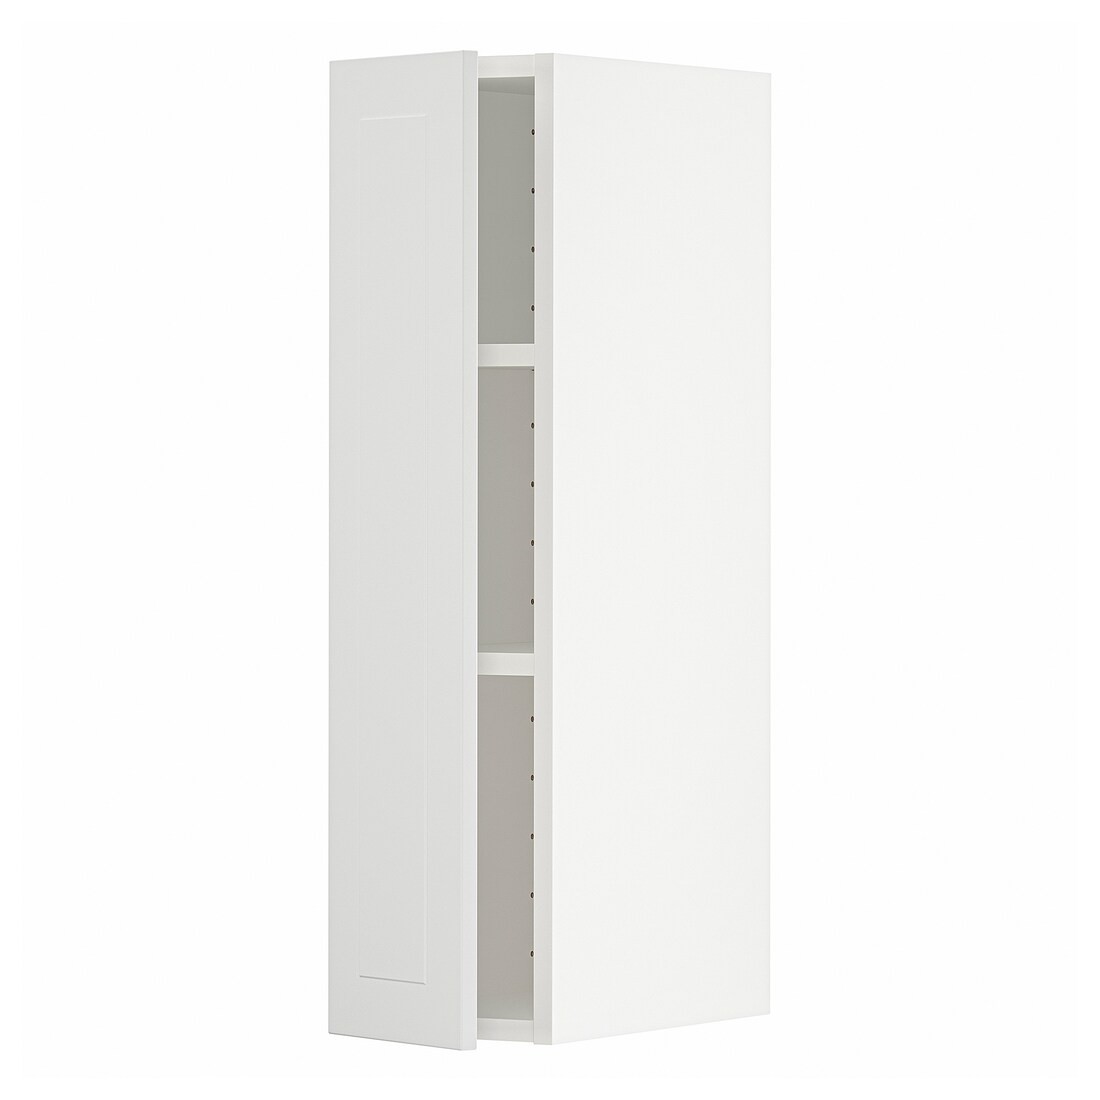 IKEA METOD МЕТОД Шкаф навесной с полками, белый / Stensund белый, 20x80 см 39459506 | 394.595.06